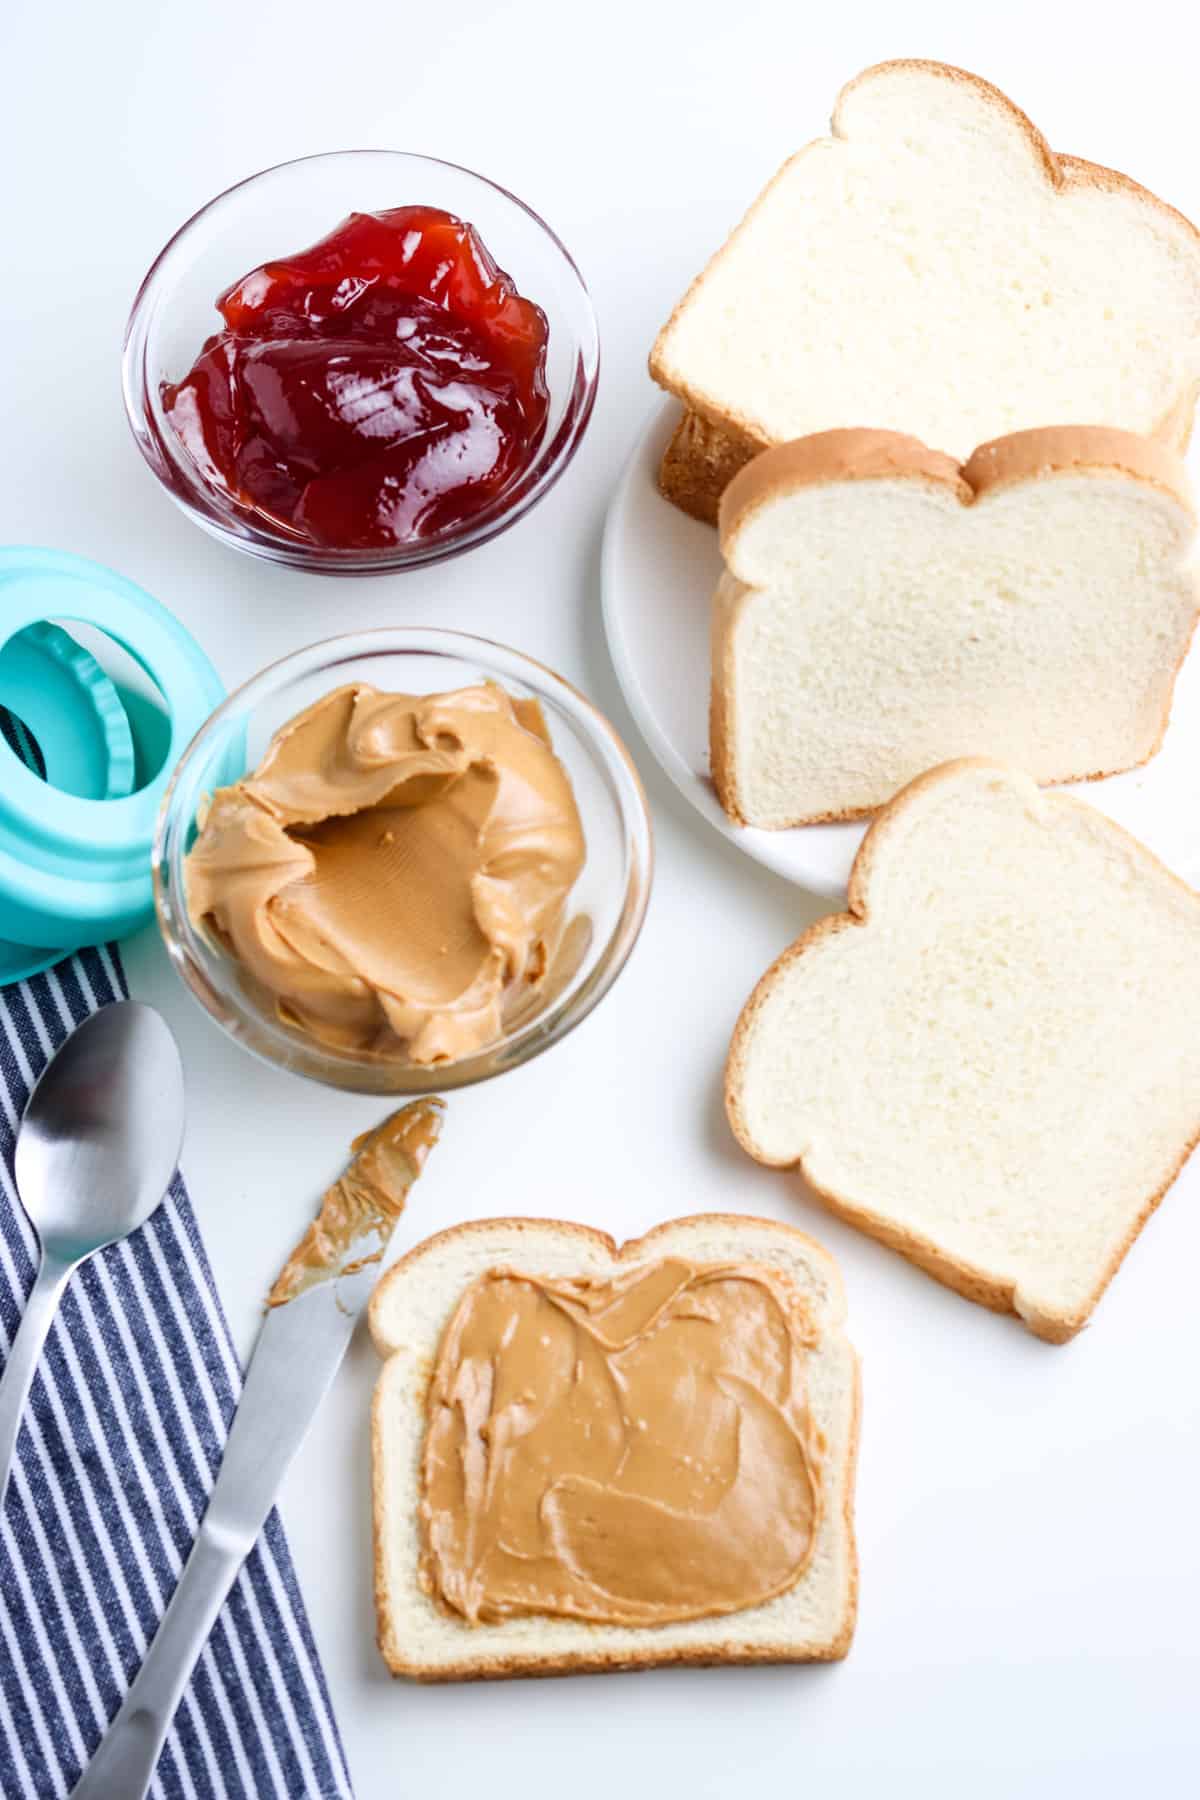 Spread Peanut Butter on One Slice of Bread